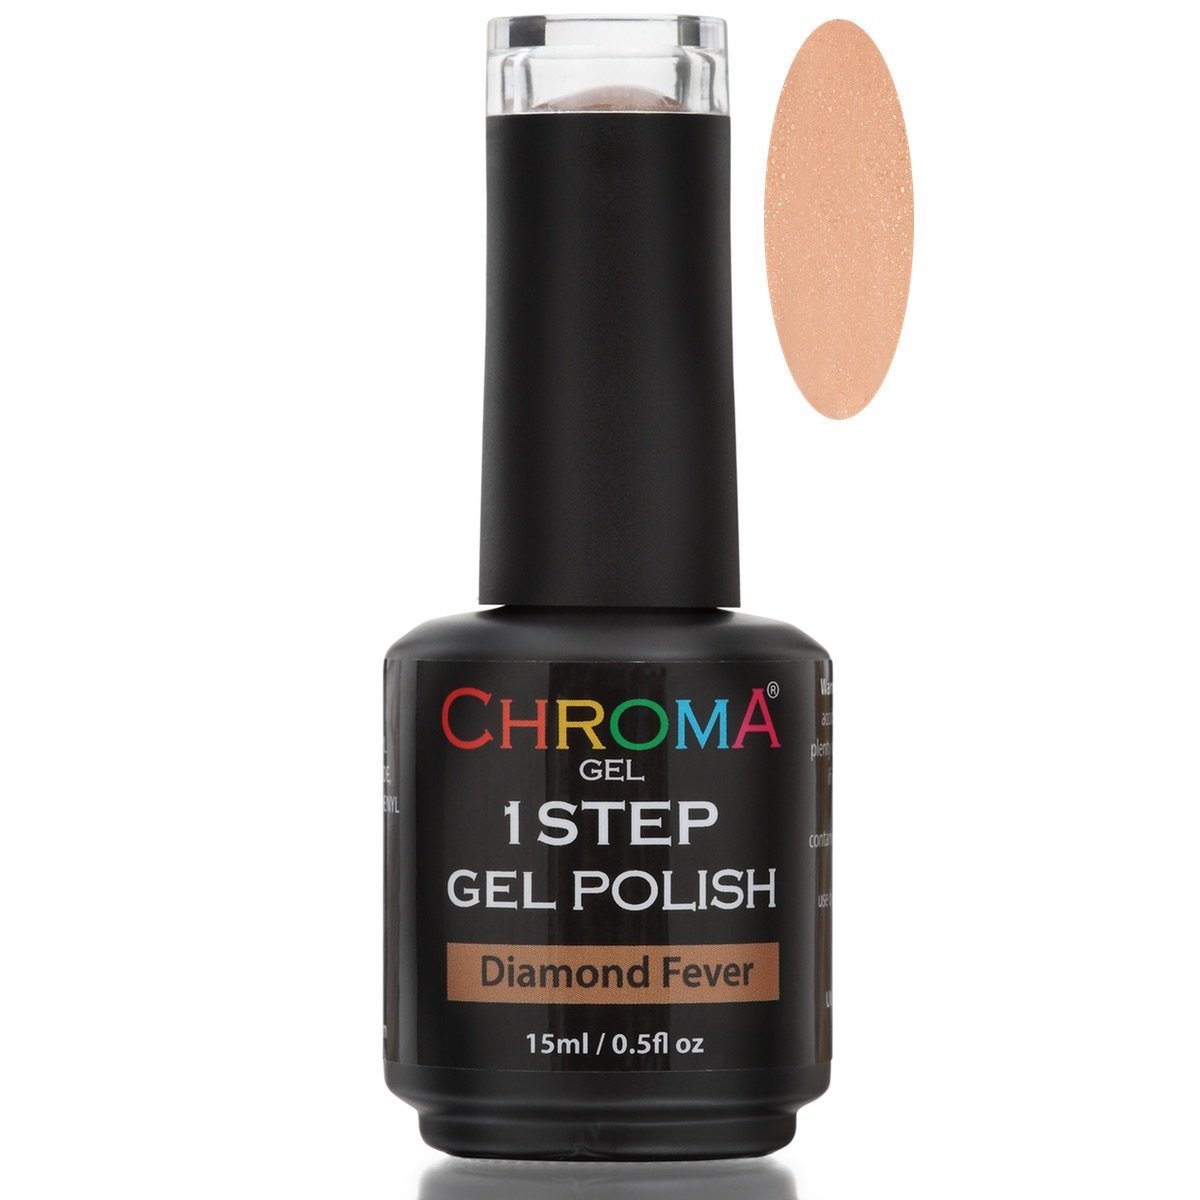 Chroma Gel 1 Step Gel Polish Diamond Fever No.18 - Beauty Hair Products LtdChroma Gel